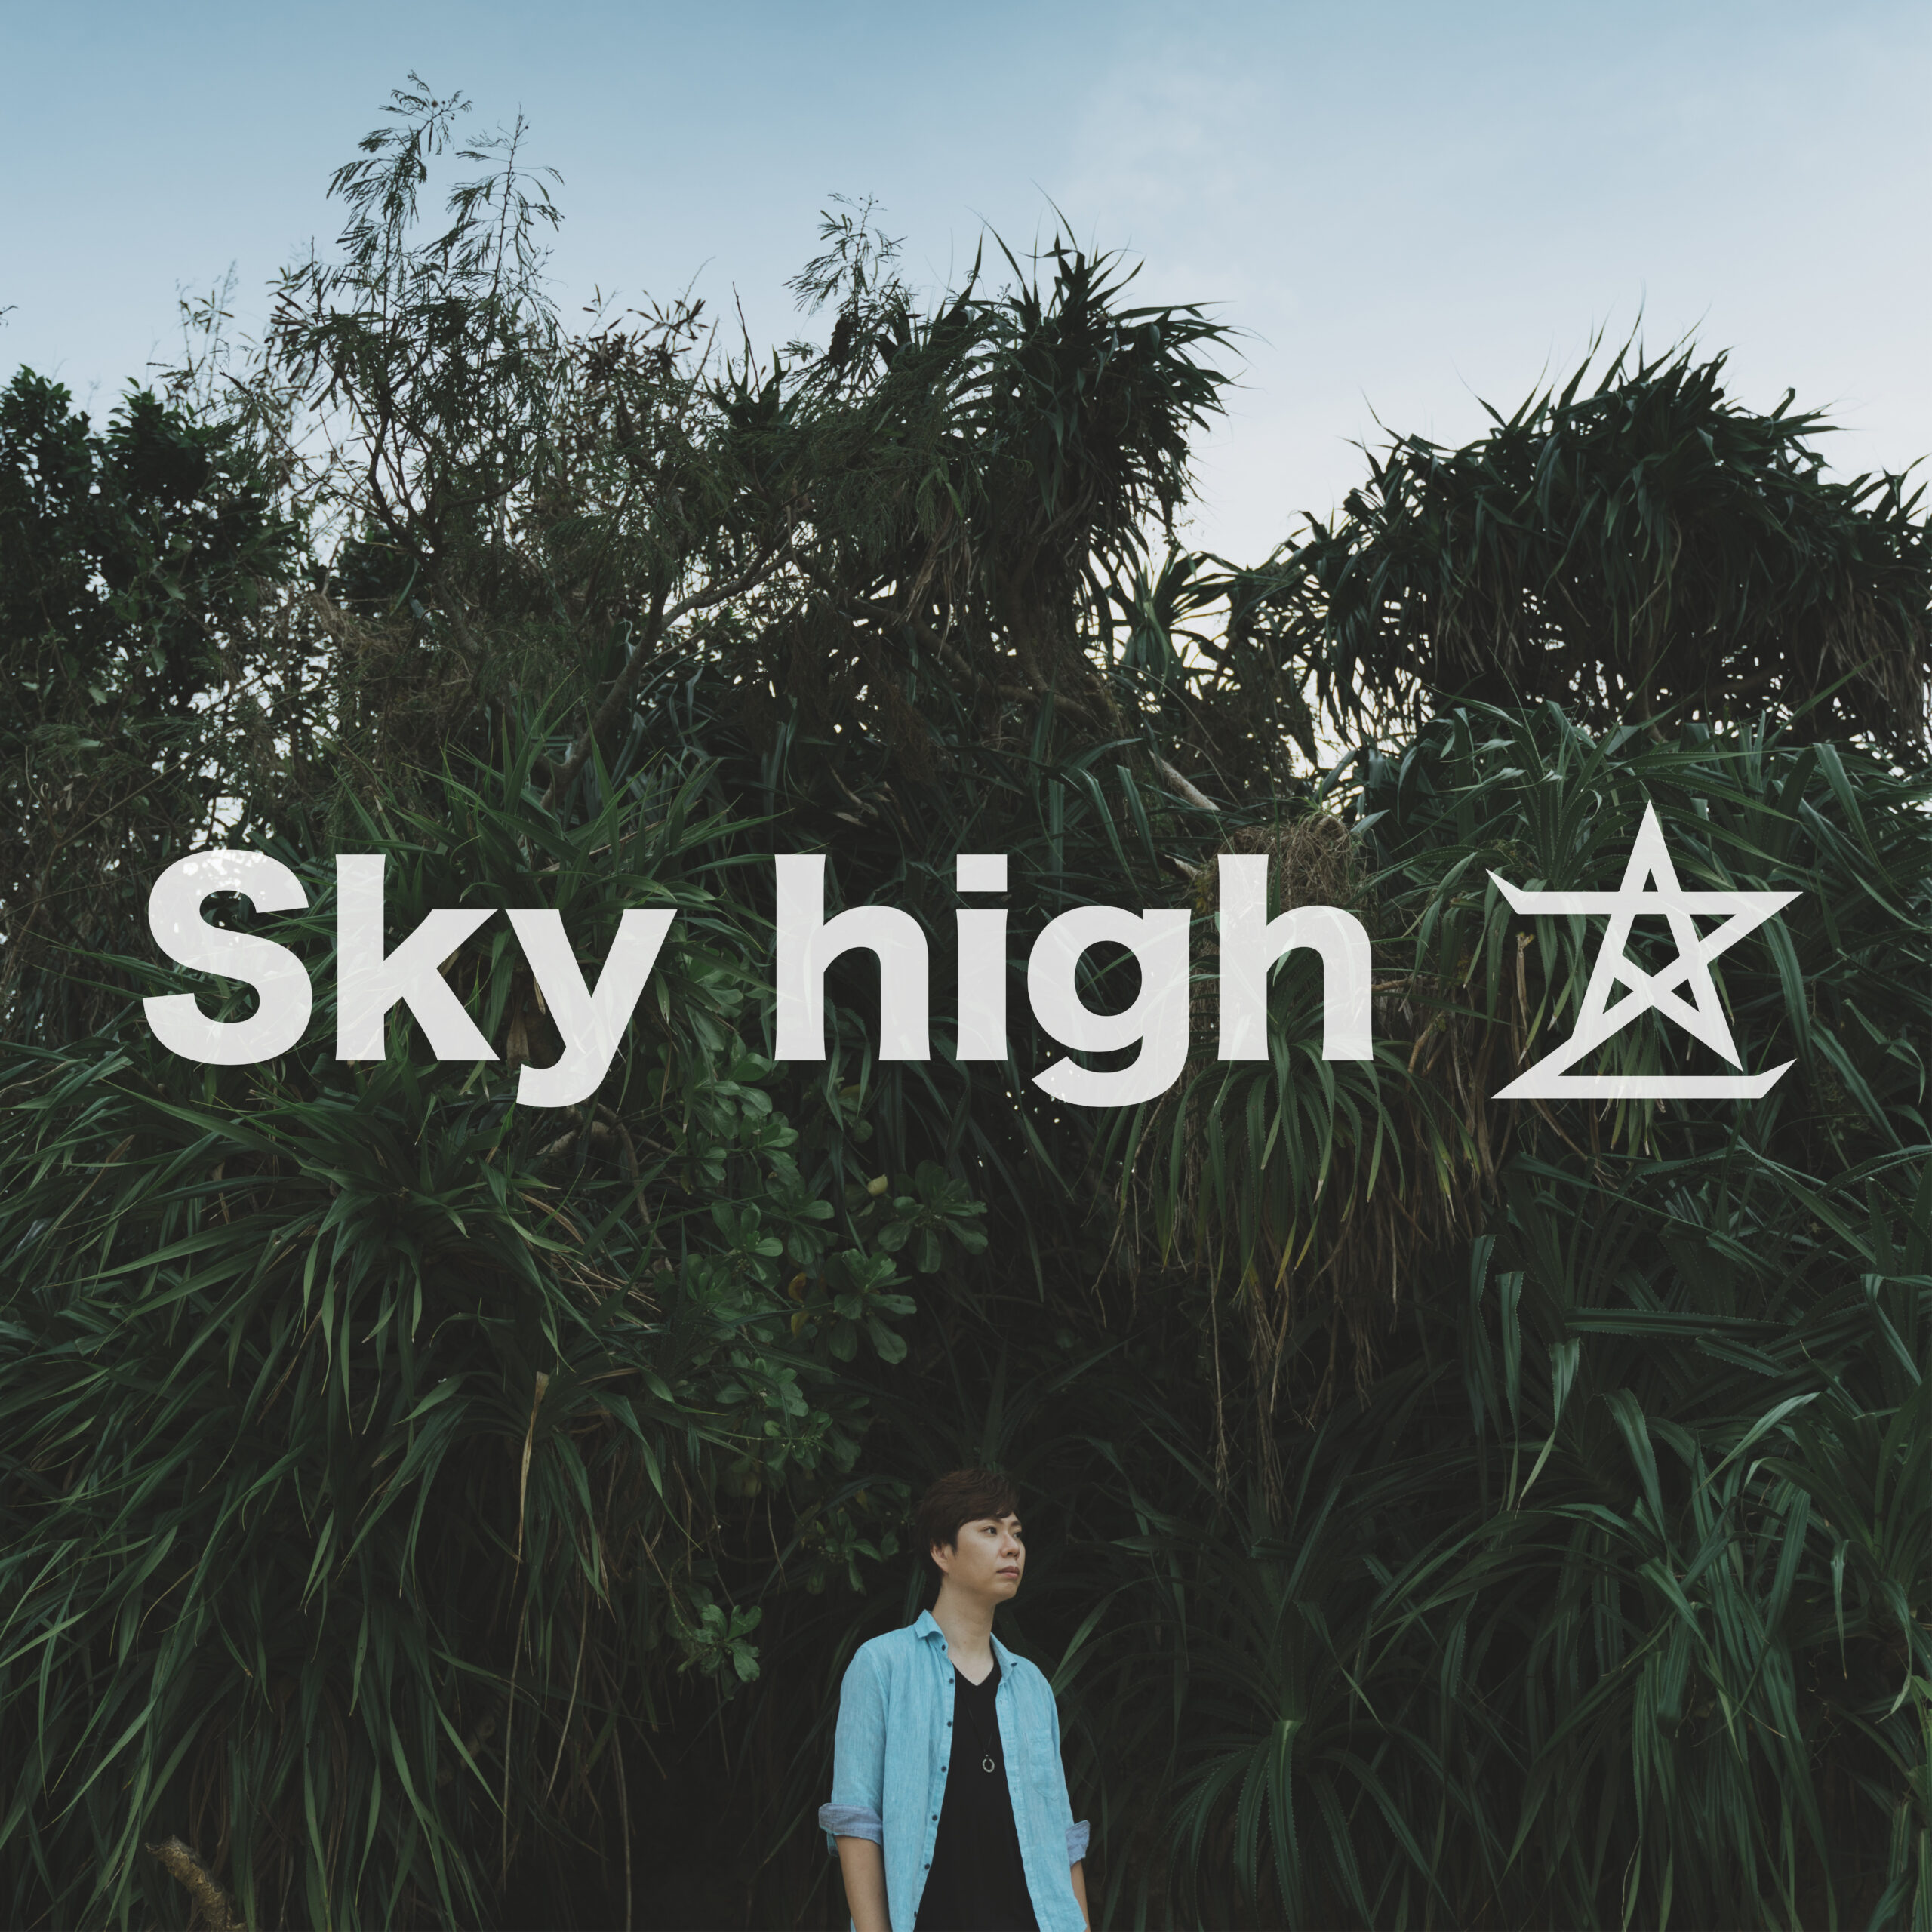 Sky high